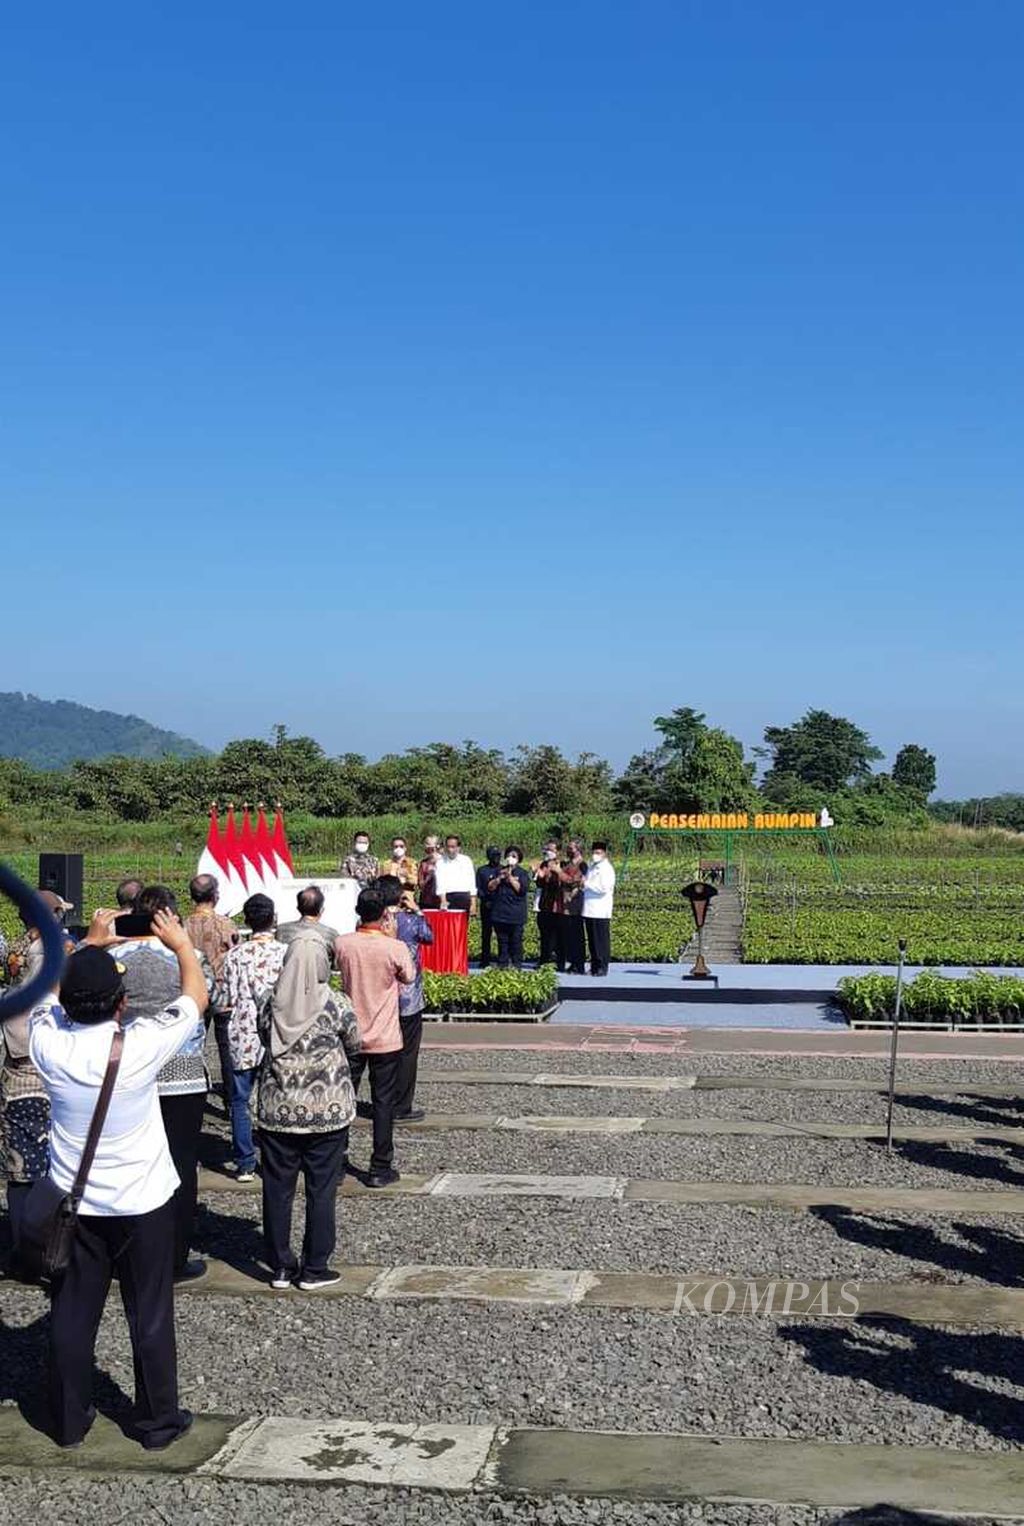 Presiden Joko Widodo pada acara Peresmian Persemaian Rumpin, Peluncuran Program Rehabilitasi Mangrove, dan World Mangrove Center di persemaian Rumpin, Kabupaten Bogor, Provinsi Jawa Barat, Jumat (10/6/2022).